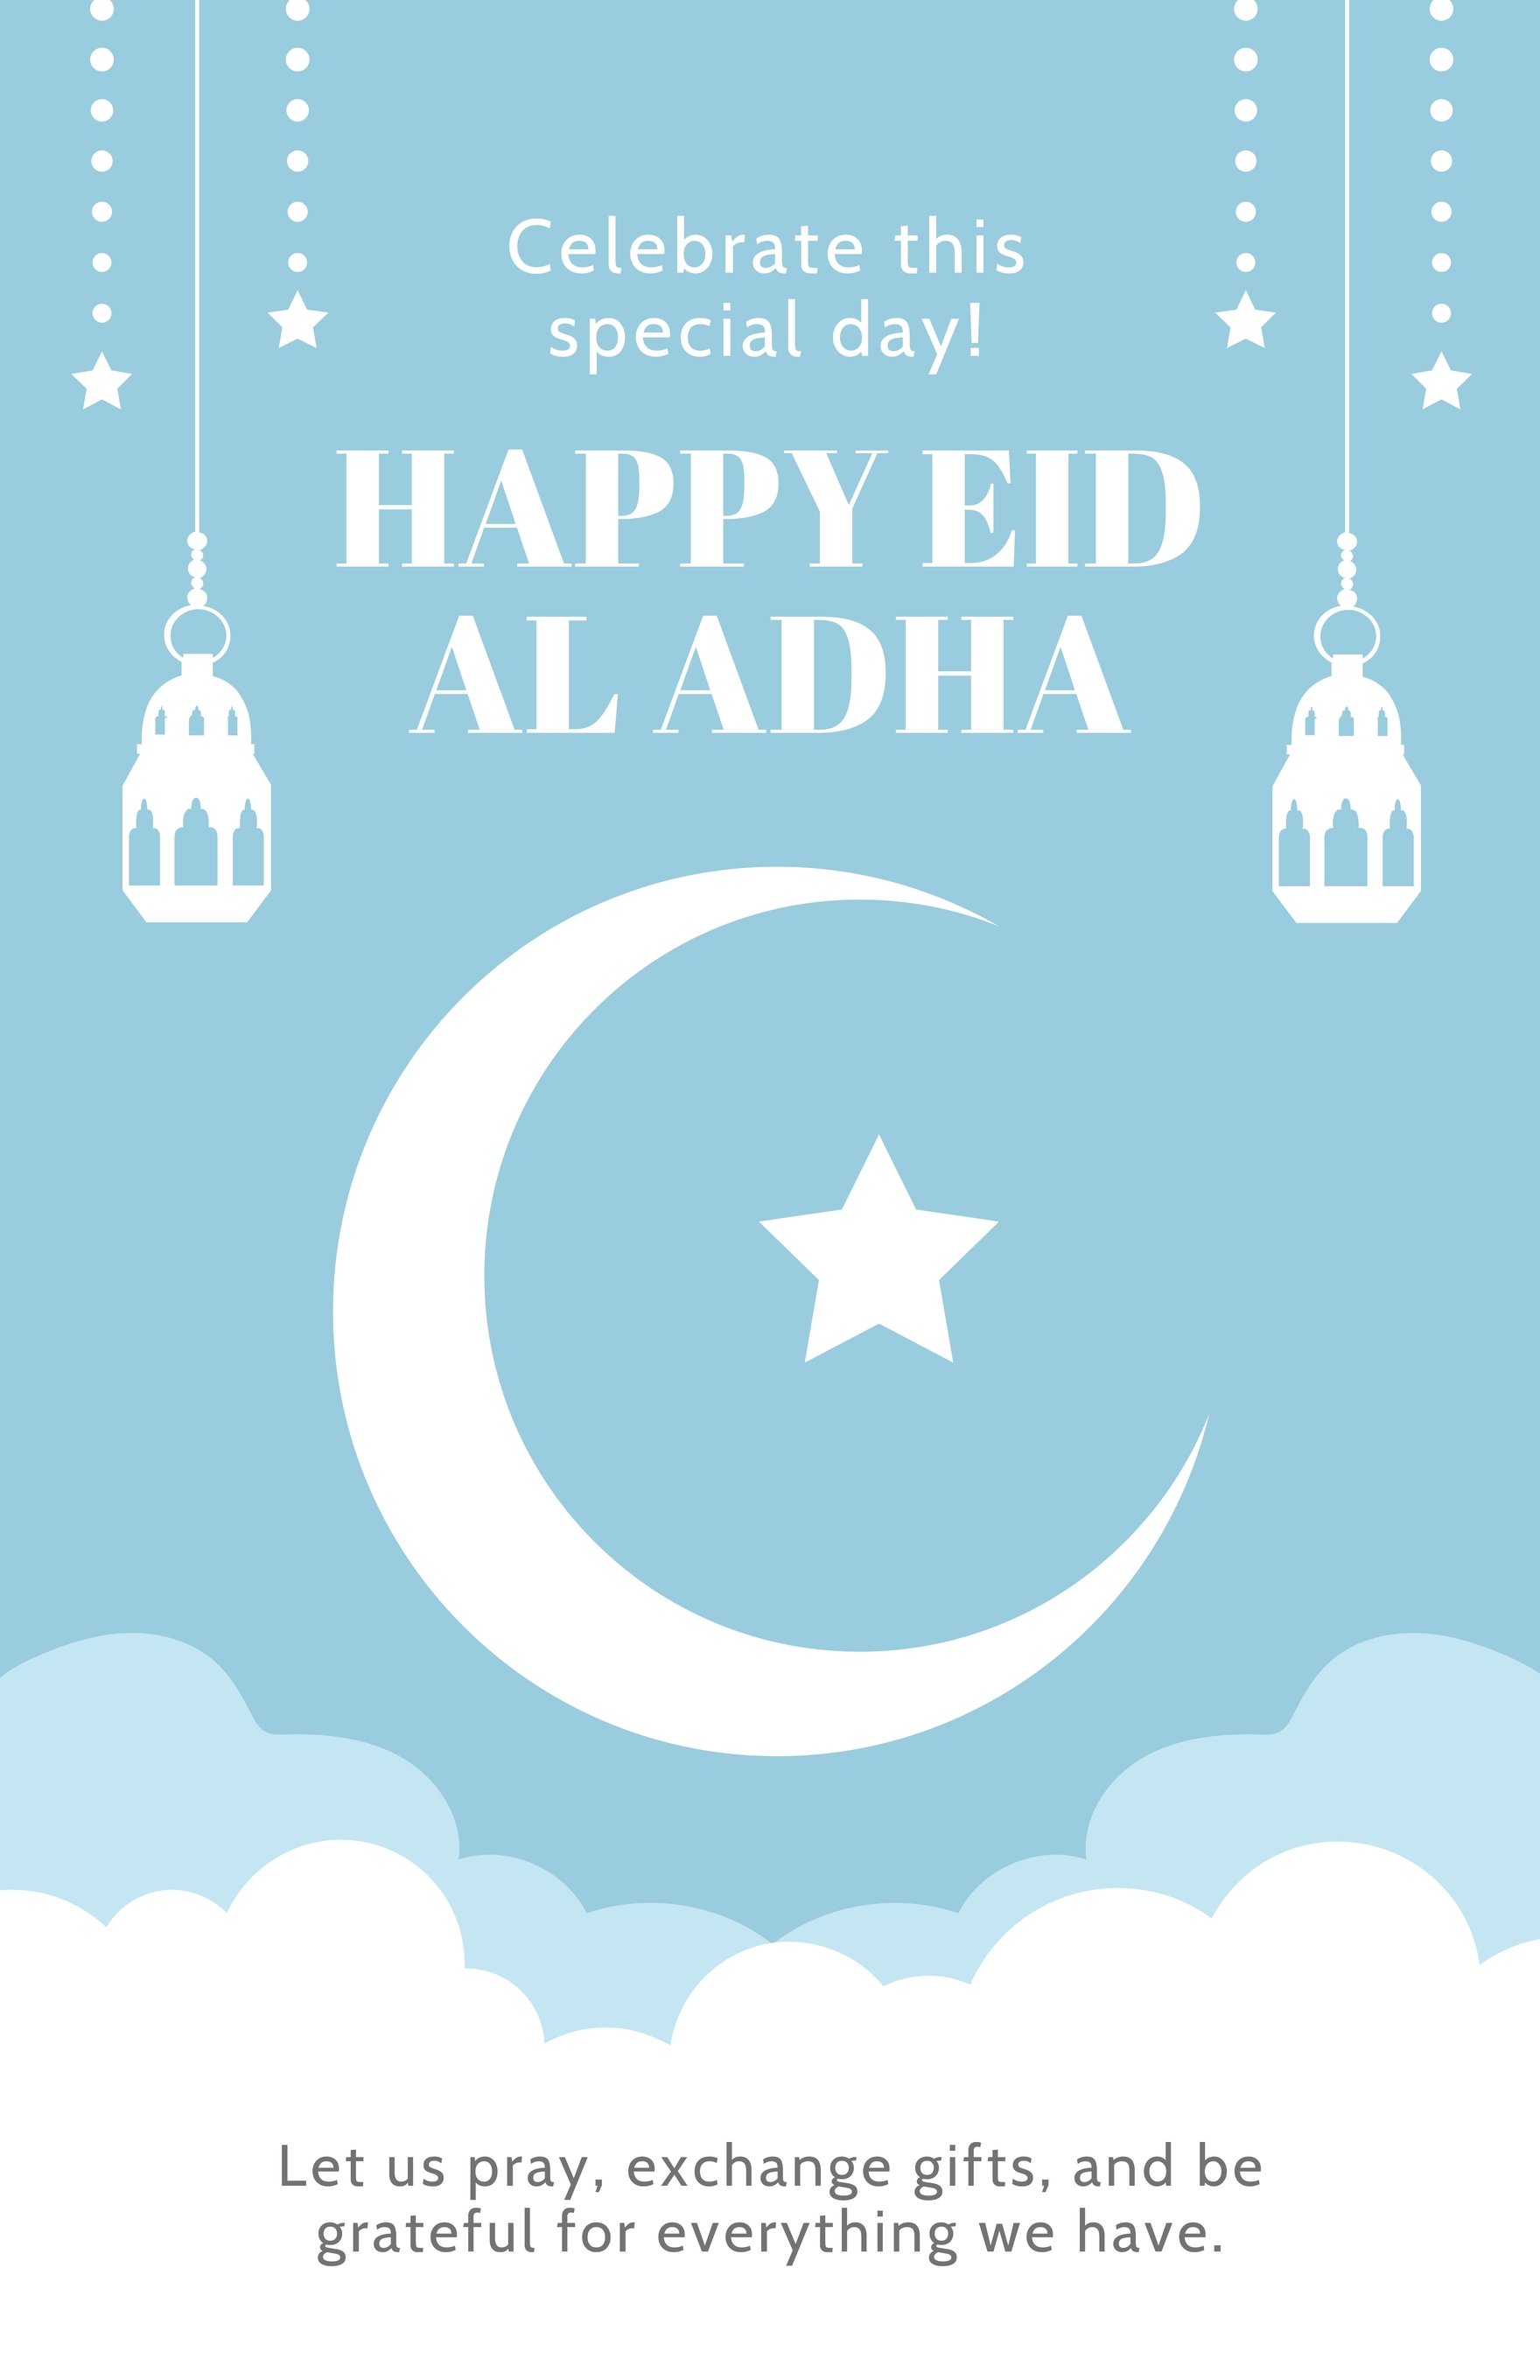 Free Happy Eid alFitr Poster EPS, Google Docs, Illustrator, JPG